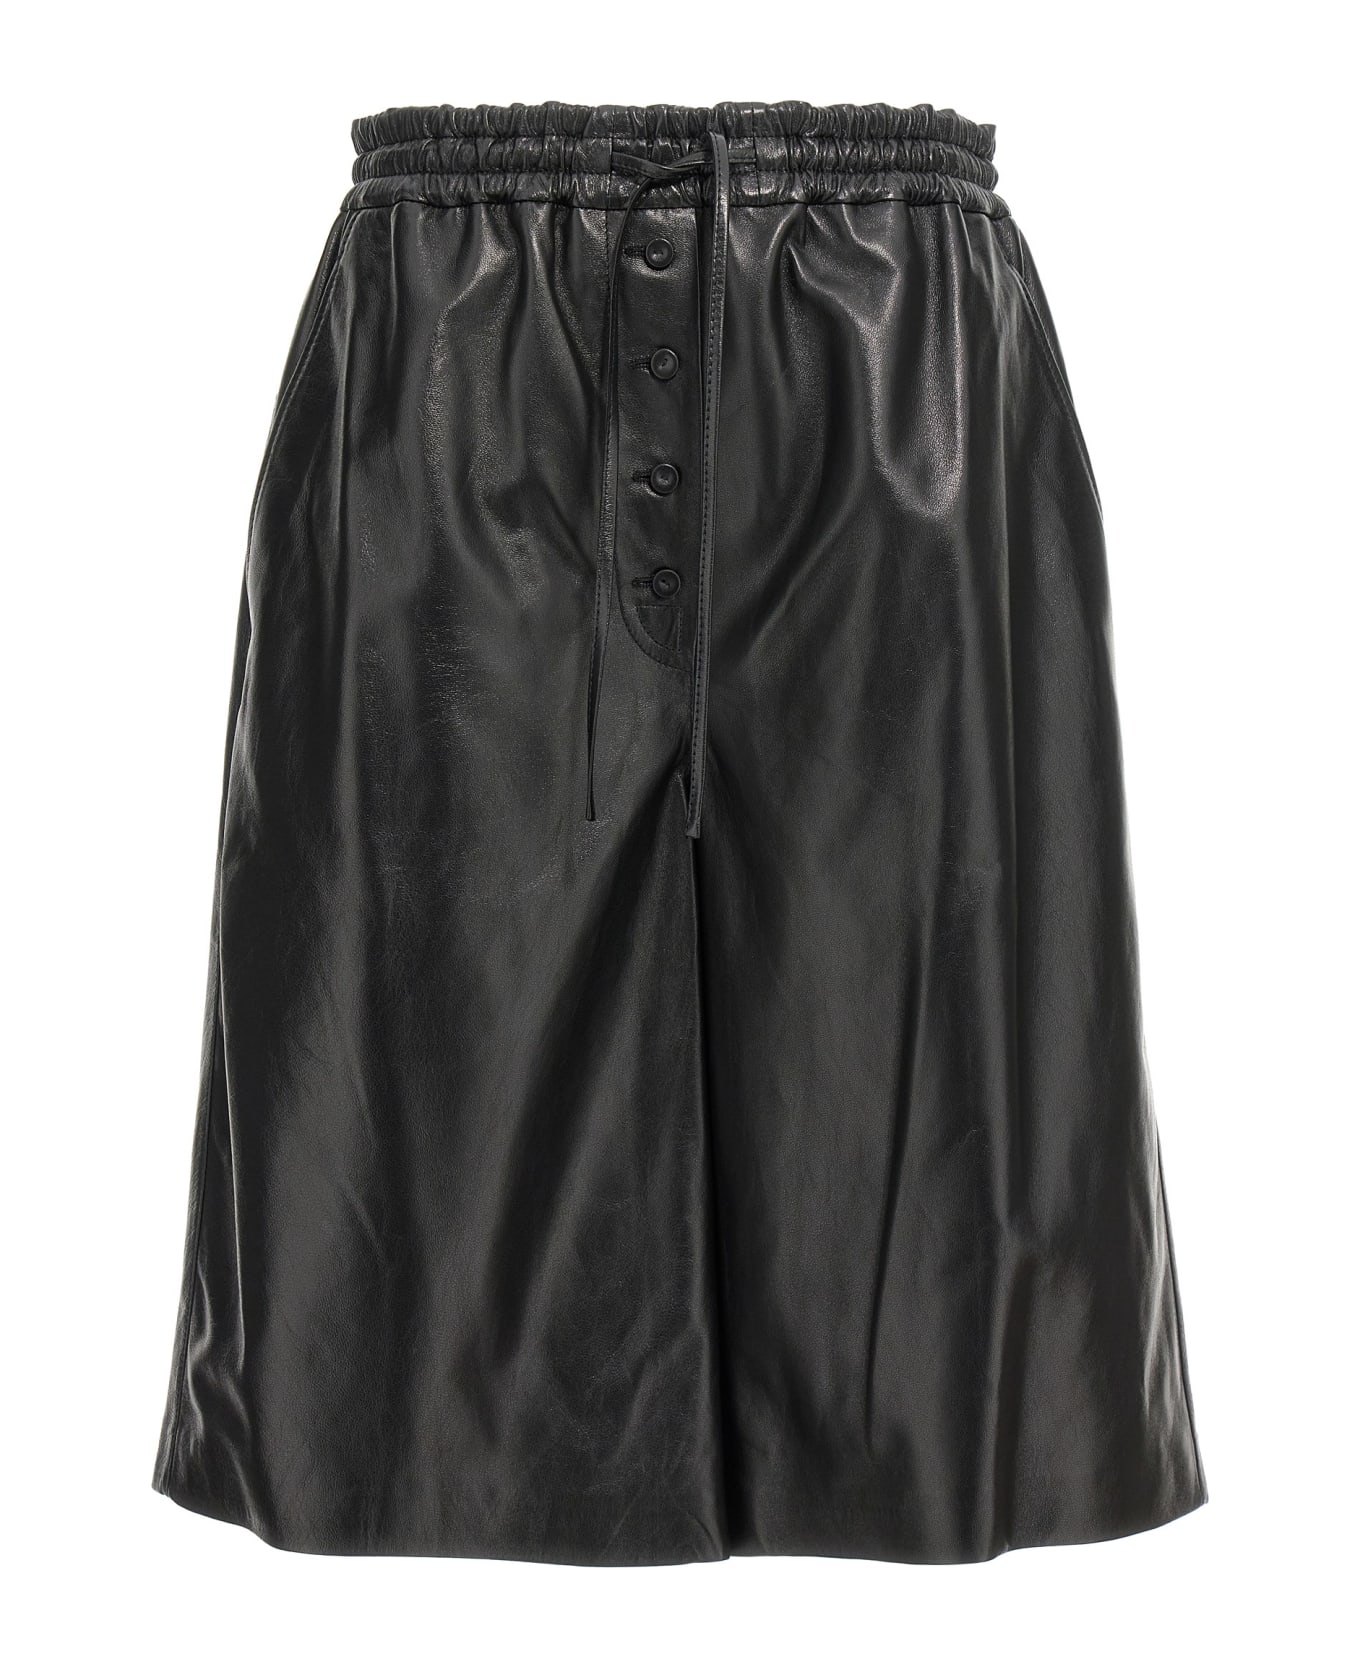 Jil Sander Black Leather Shorts - Black